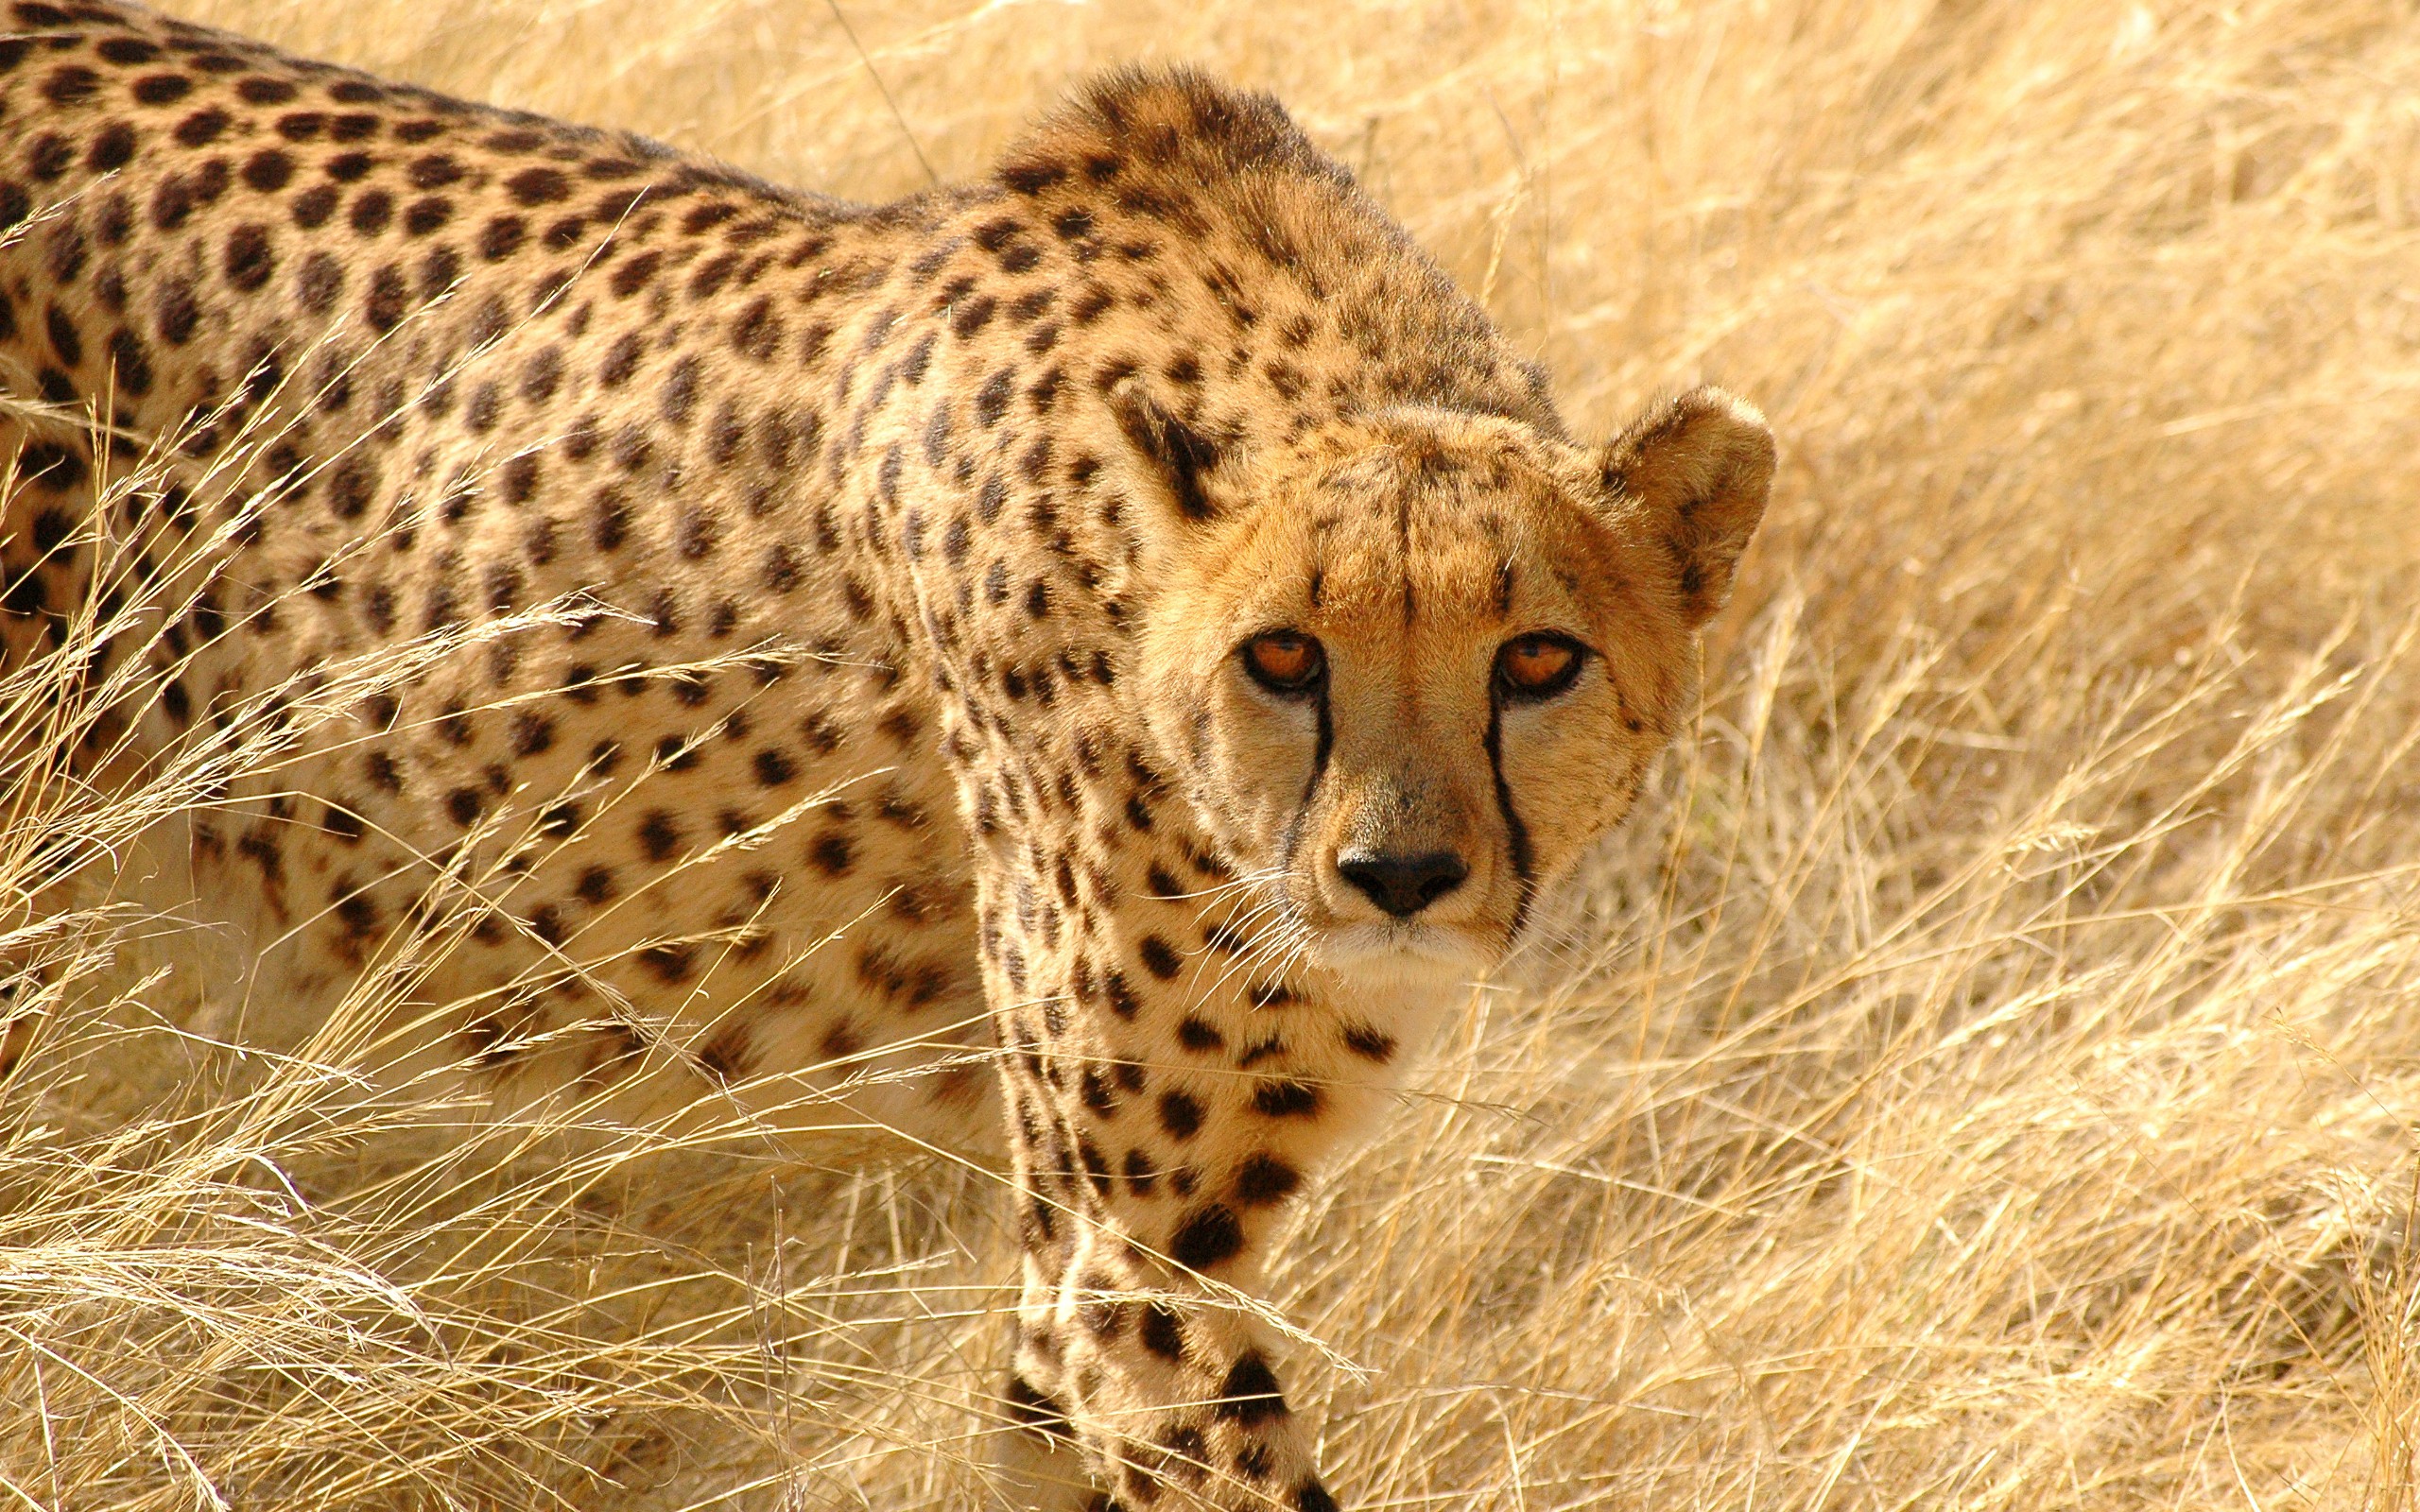 Bakgrunnsbilder gepard Store kattedyr Dyr Geparder